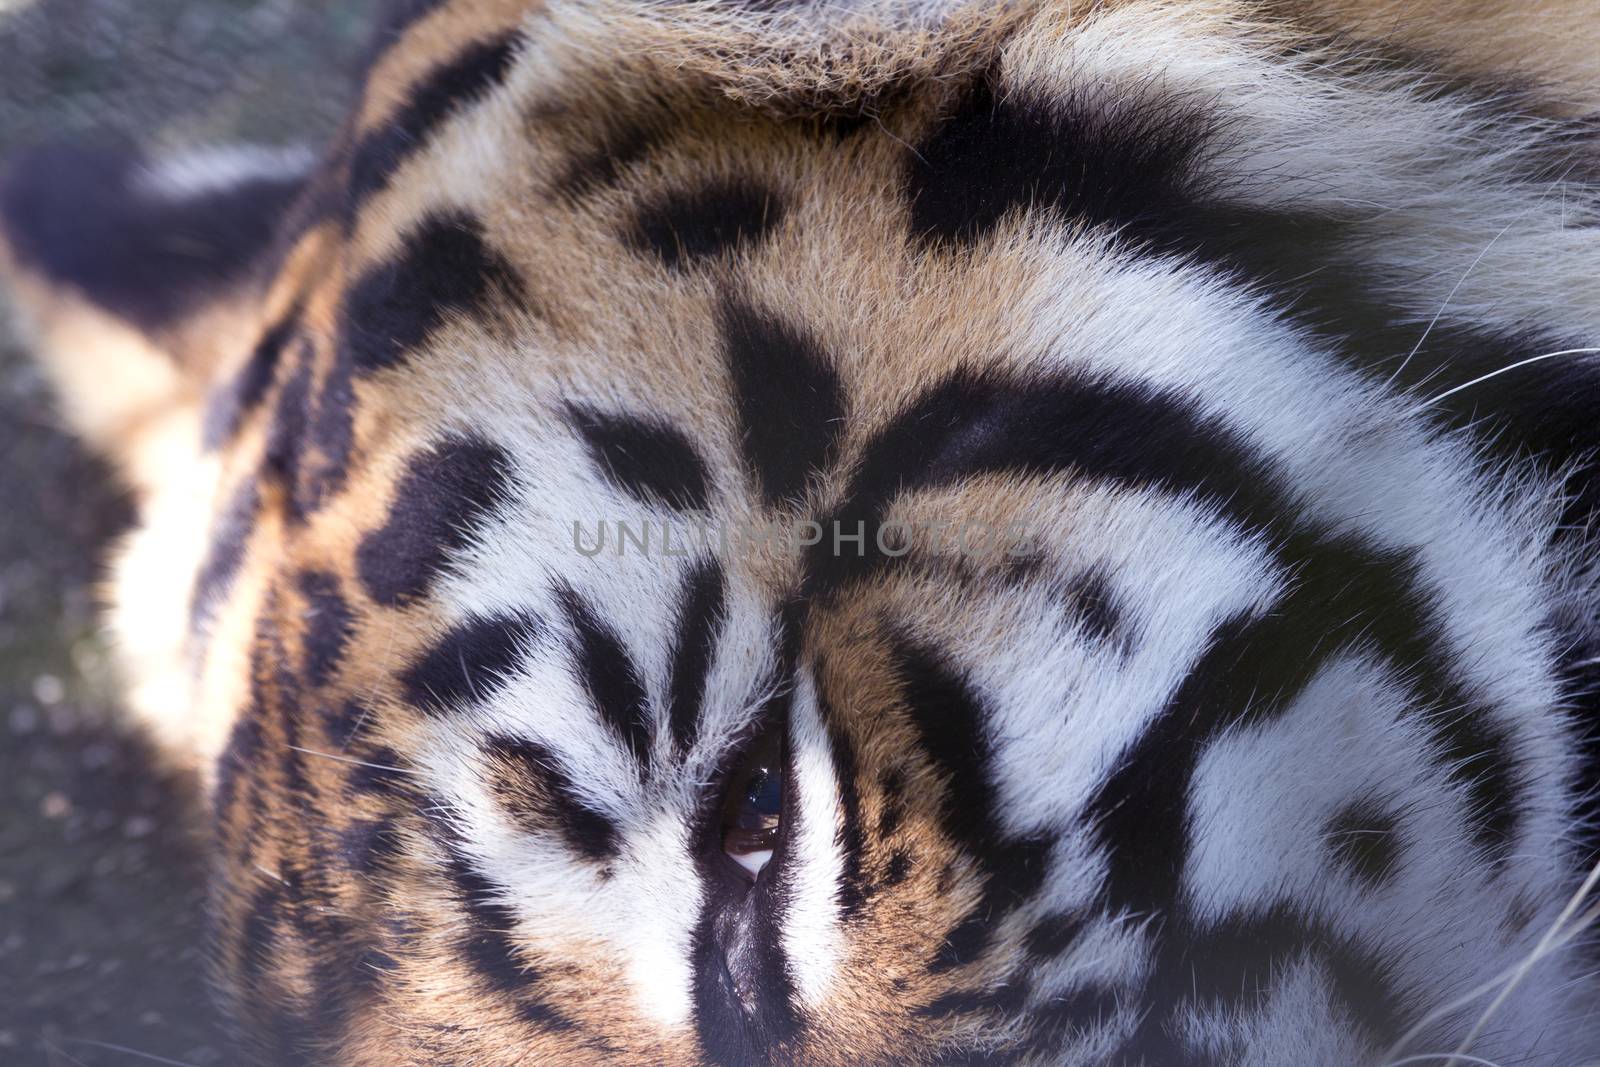 eye of the tiger  by wyoosumran